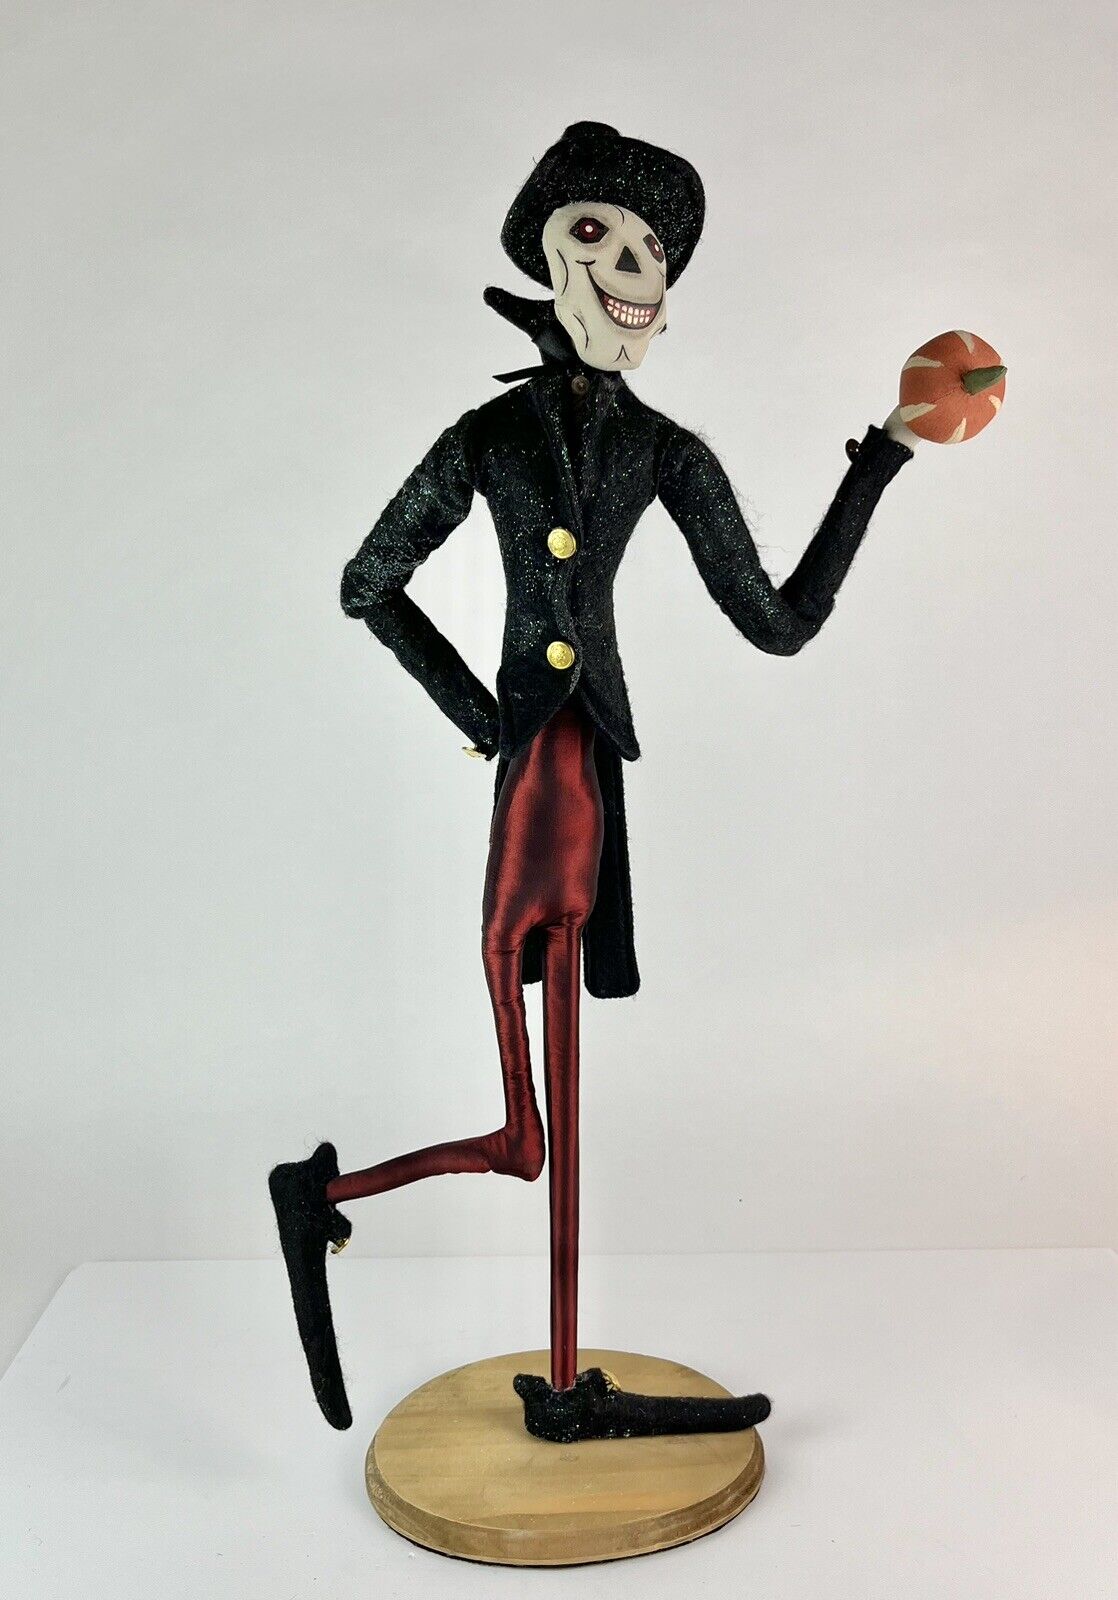 Joe Spencer Gathered Traditions Halloween Mr. Bones Appx 30” Tall Pumpkin